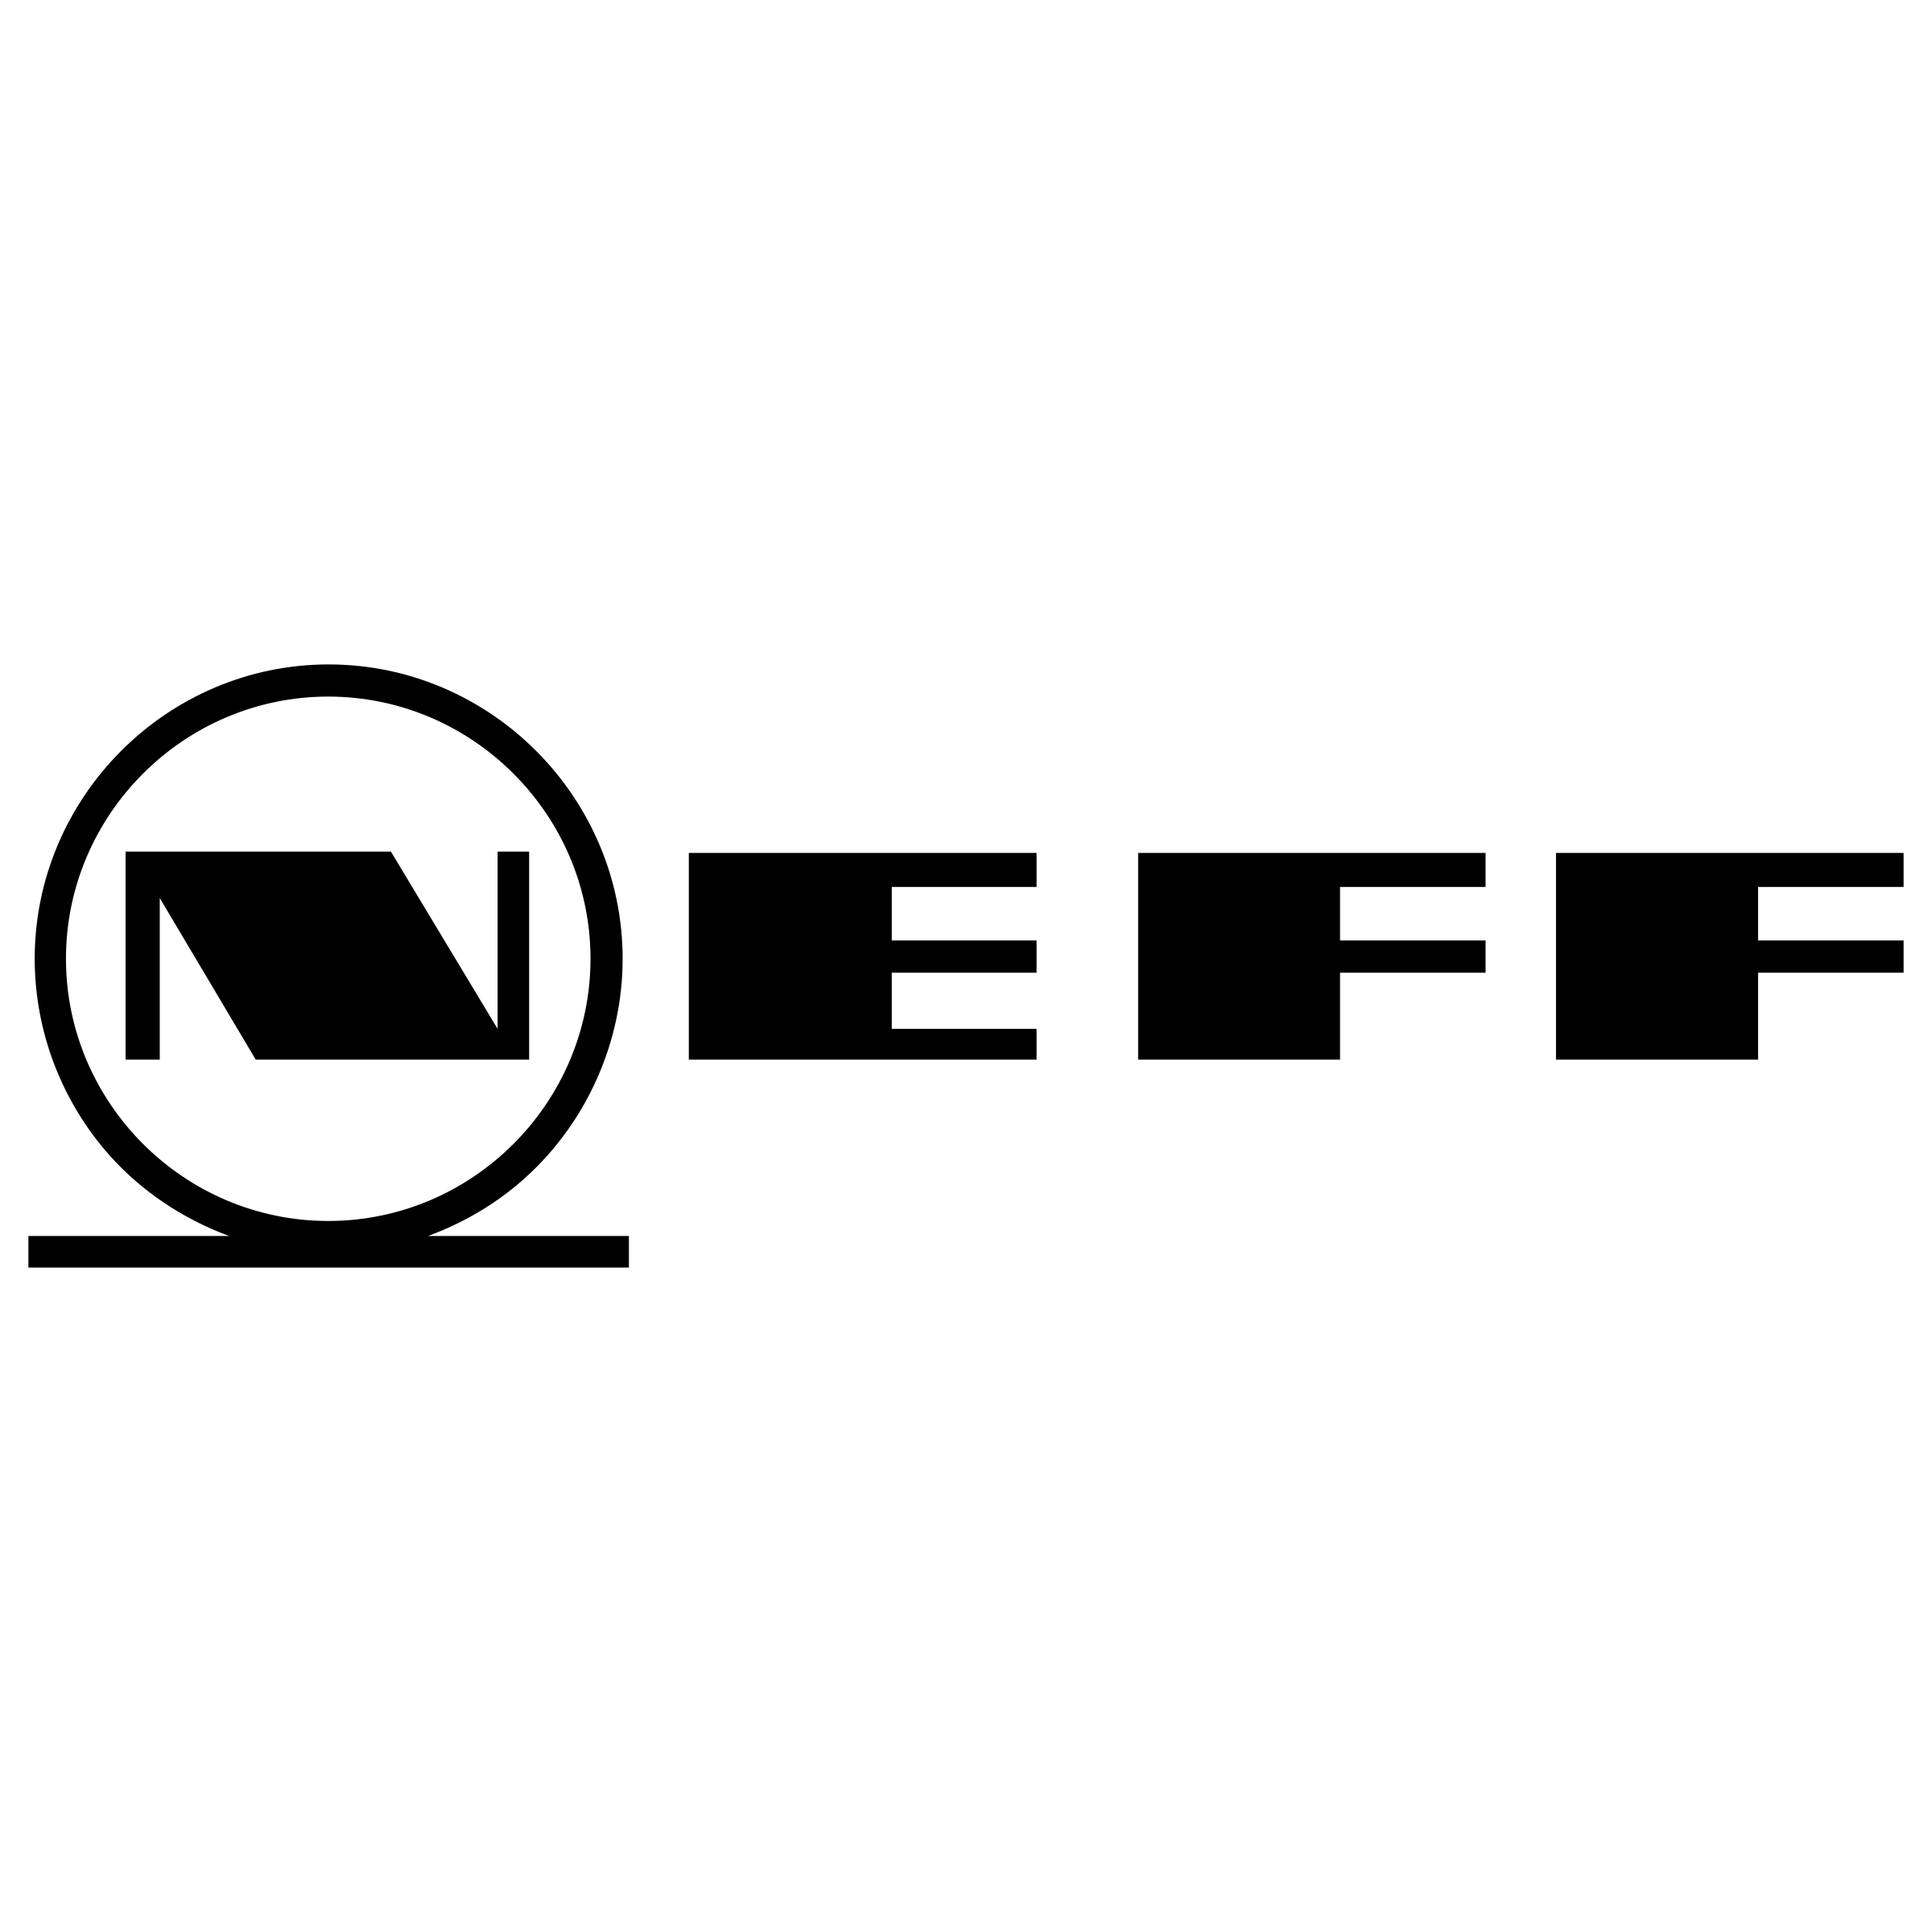 Black and White Neff Logo - Neff Logo PNG Transparent & SVG Vector - Freebie Supply